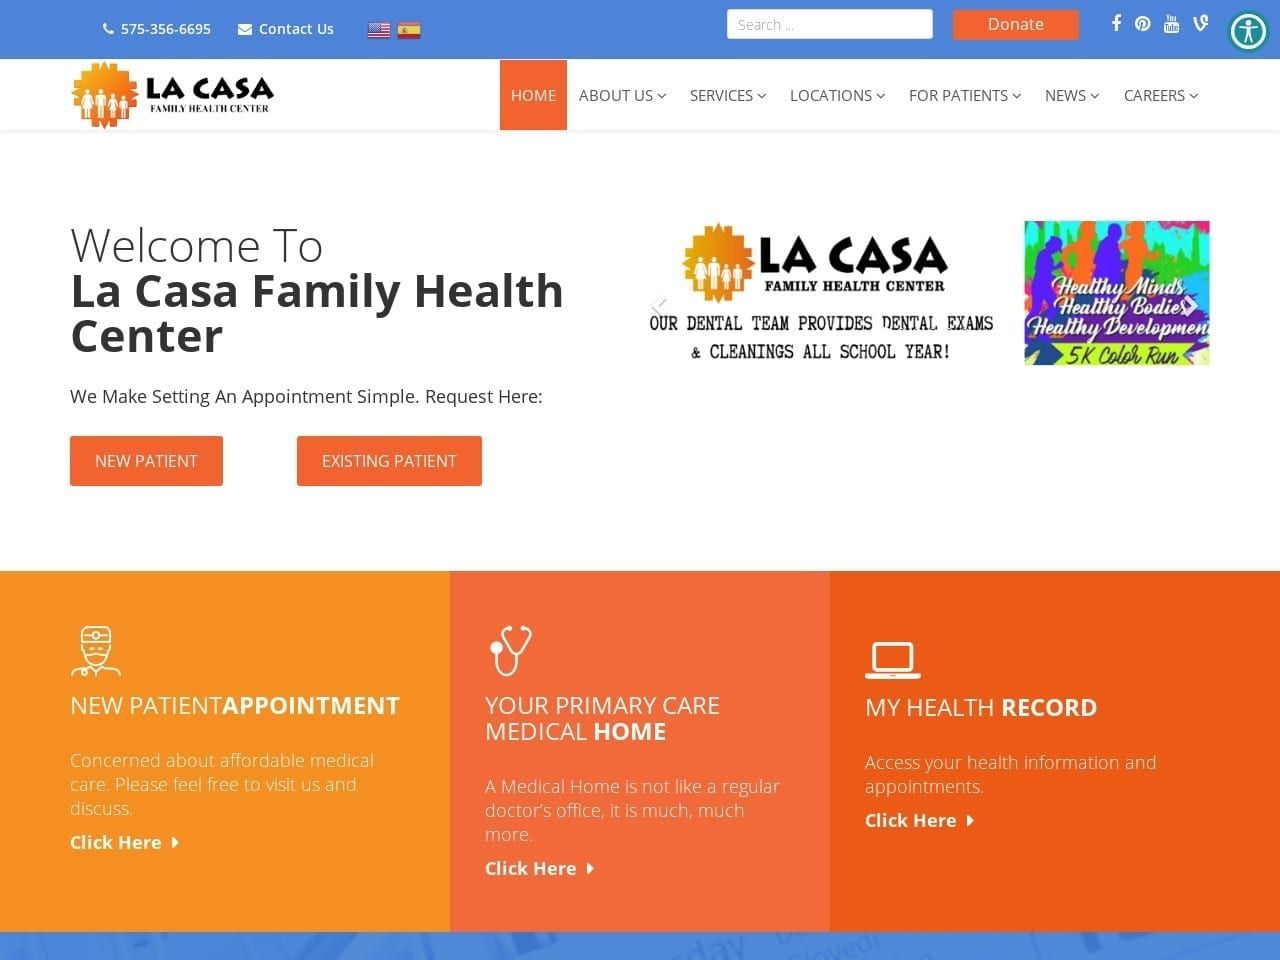 La Casa Family Health Center Website Screenshot from lacasahealth.com